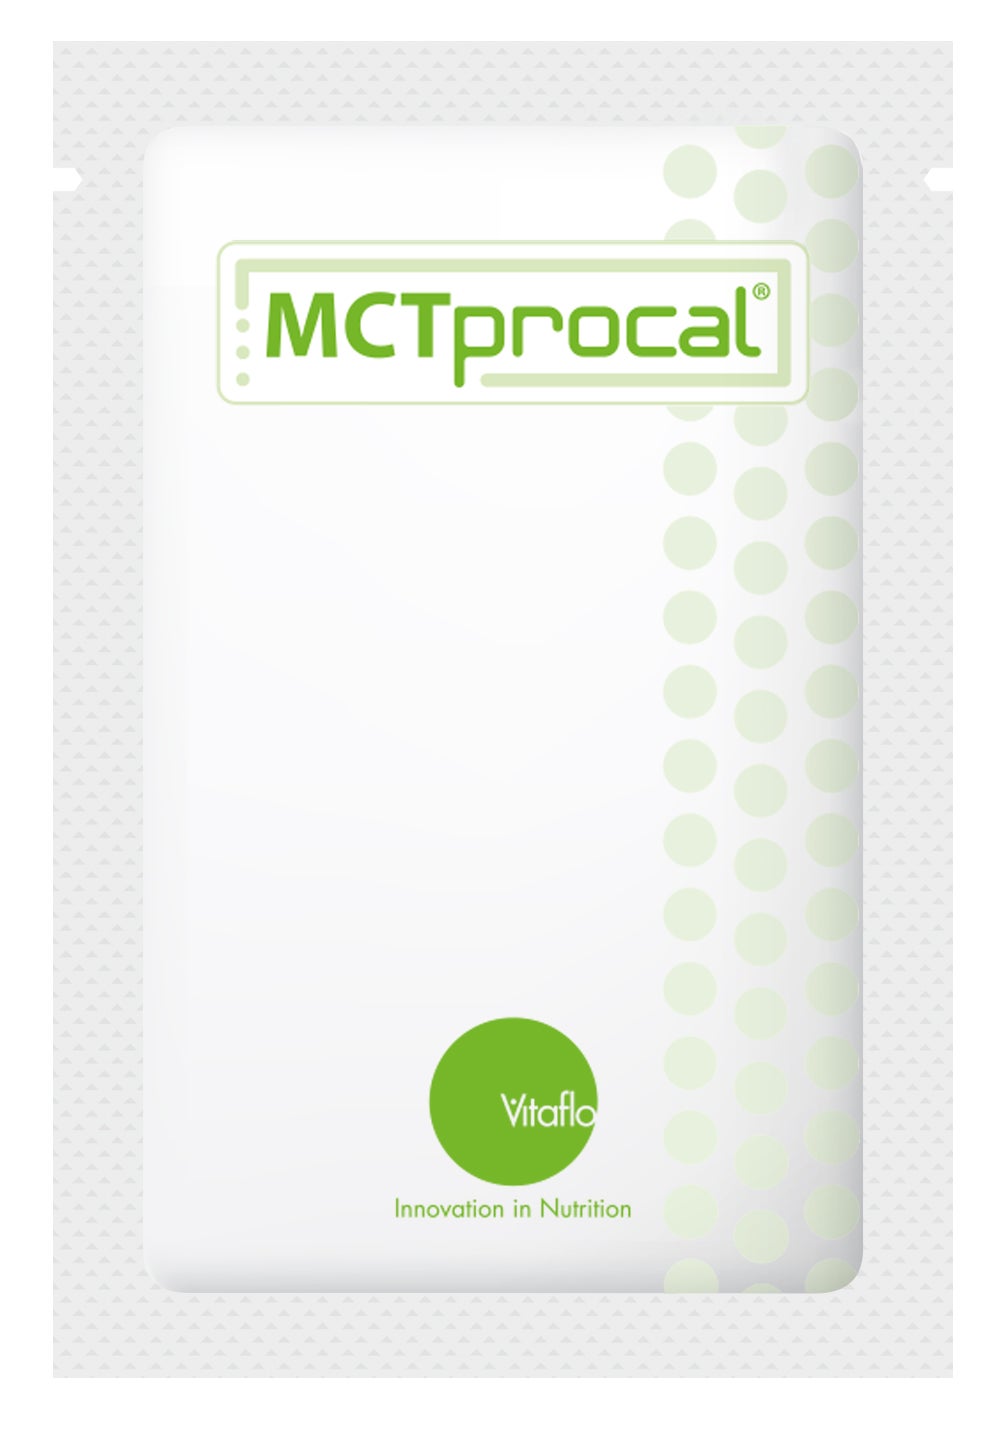 MCT procal